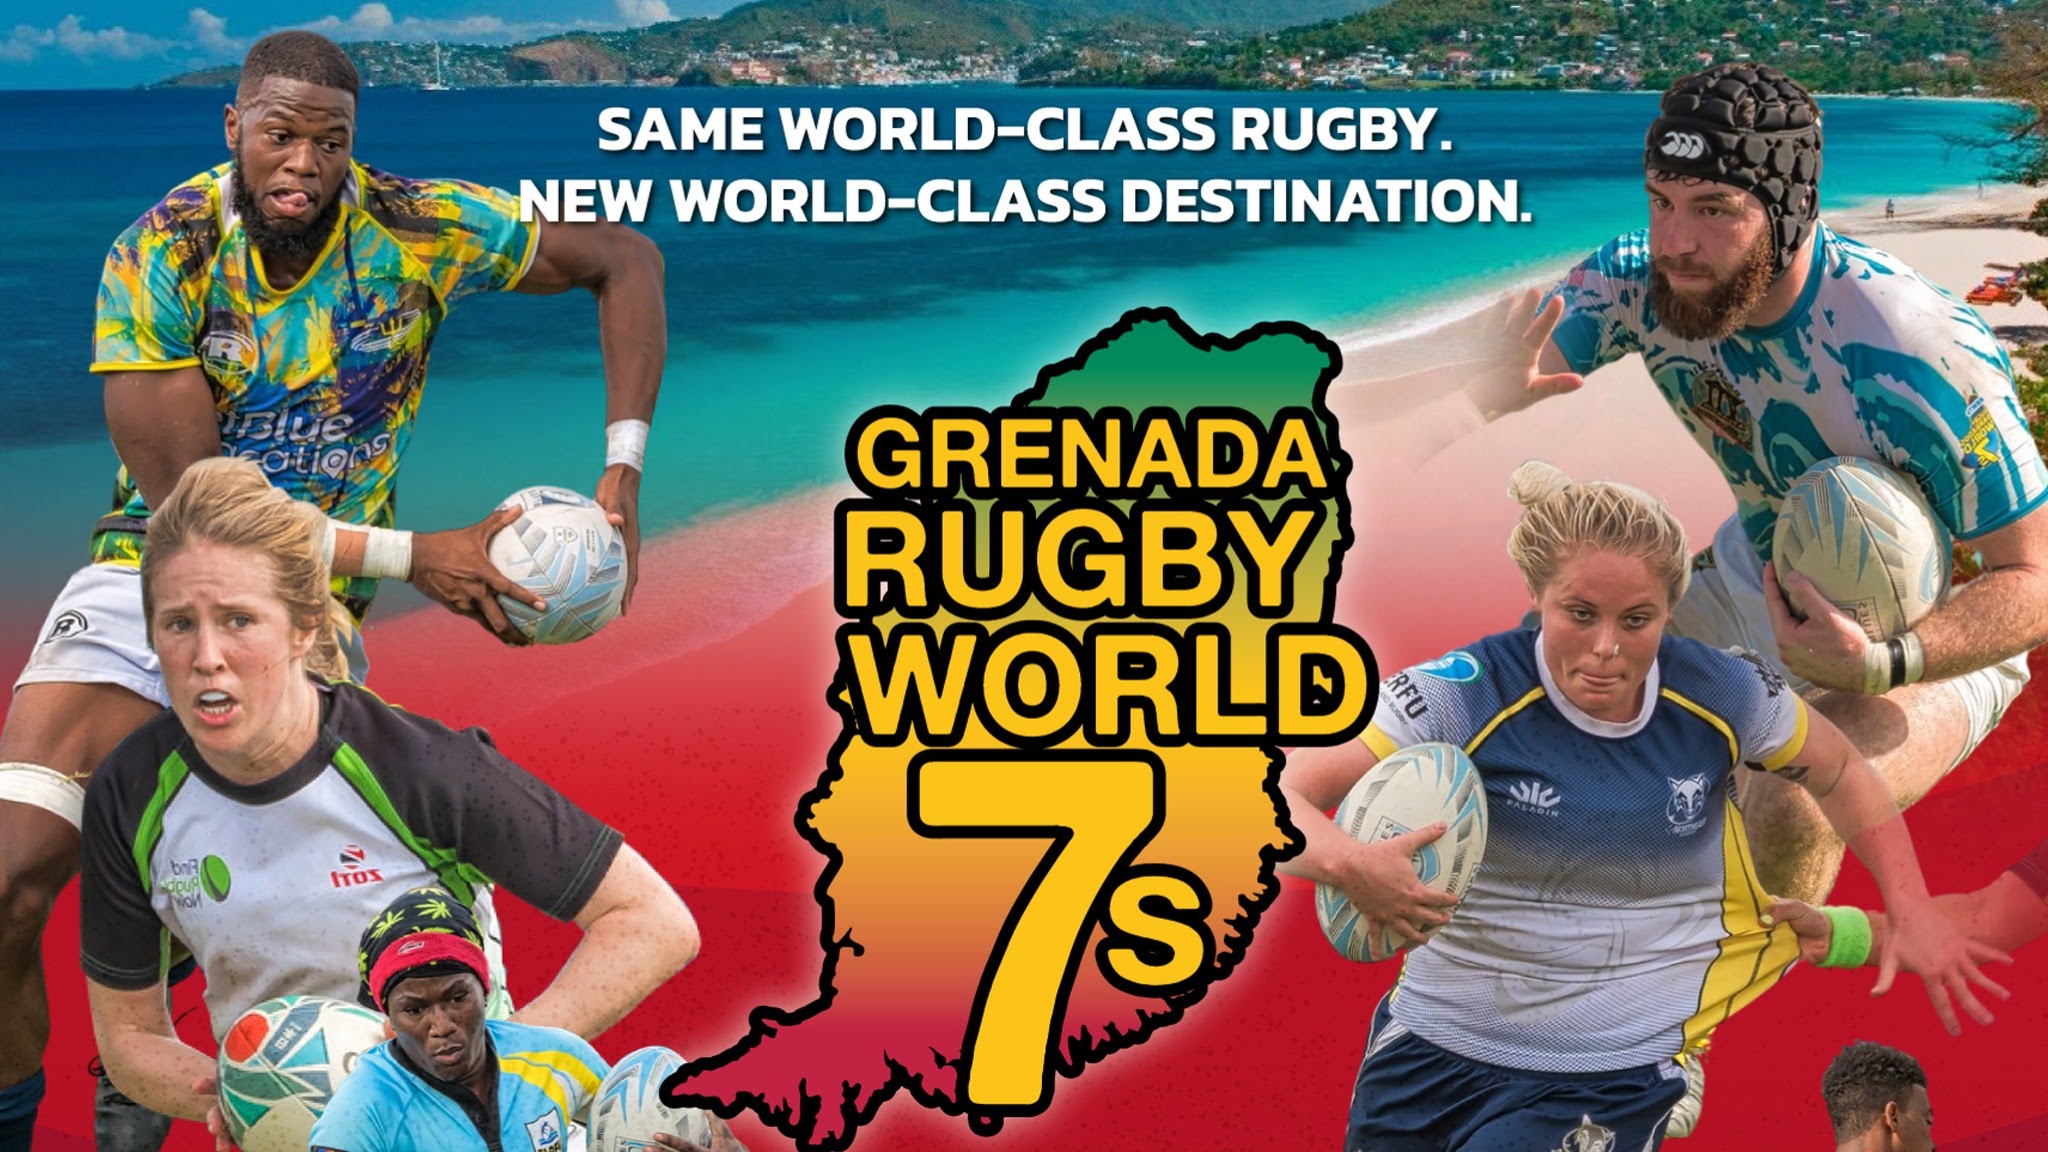 Grenada Rugby World 7s